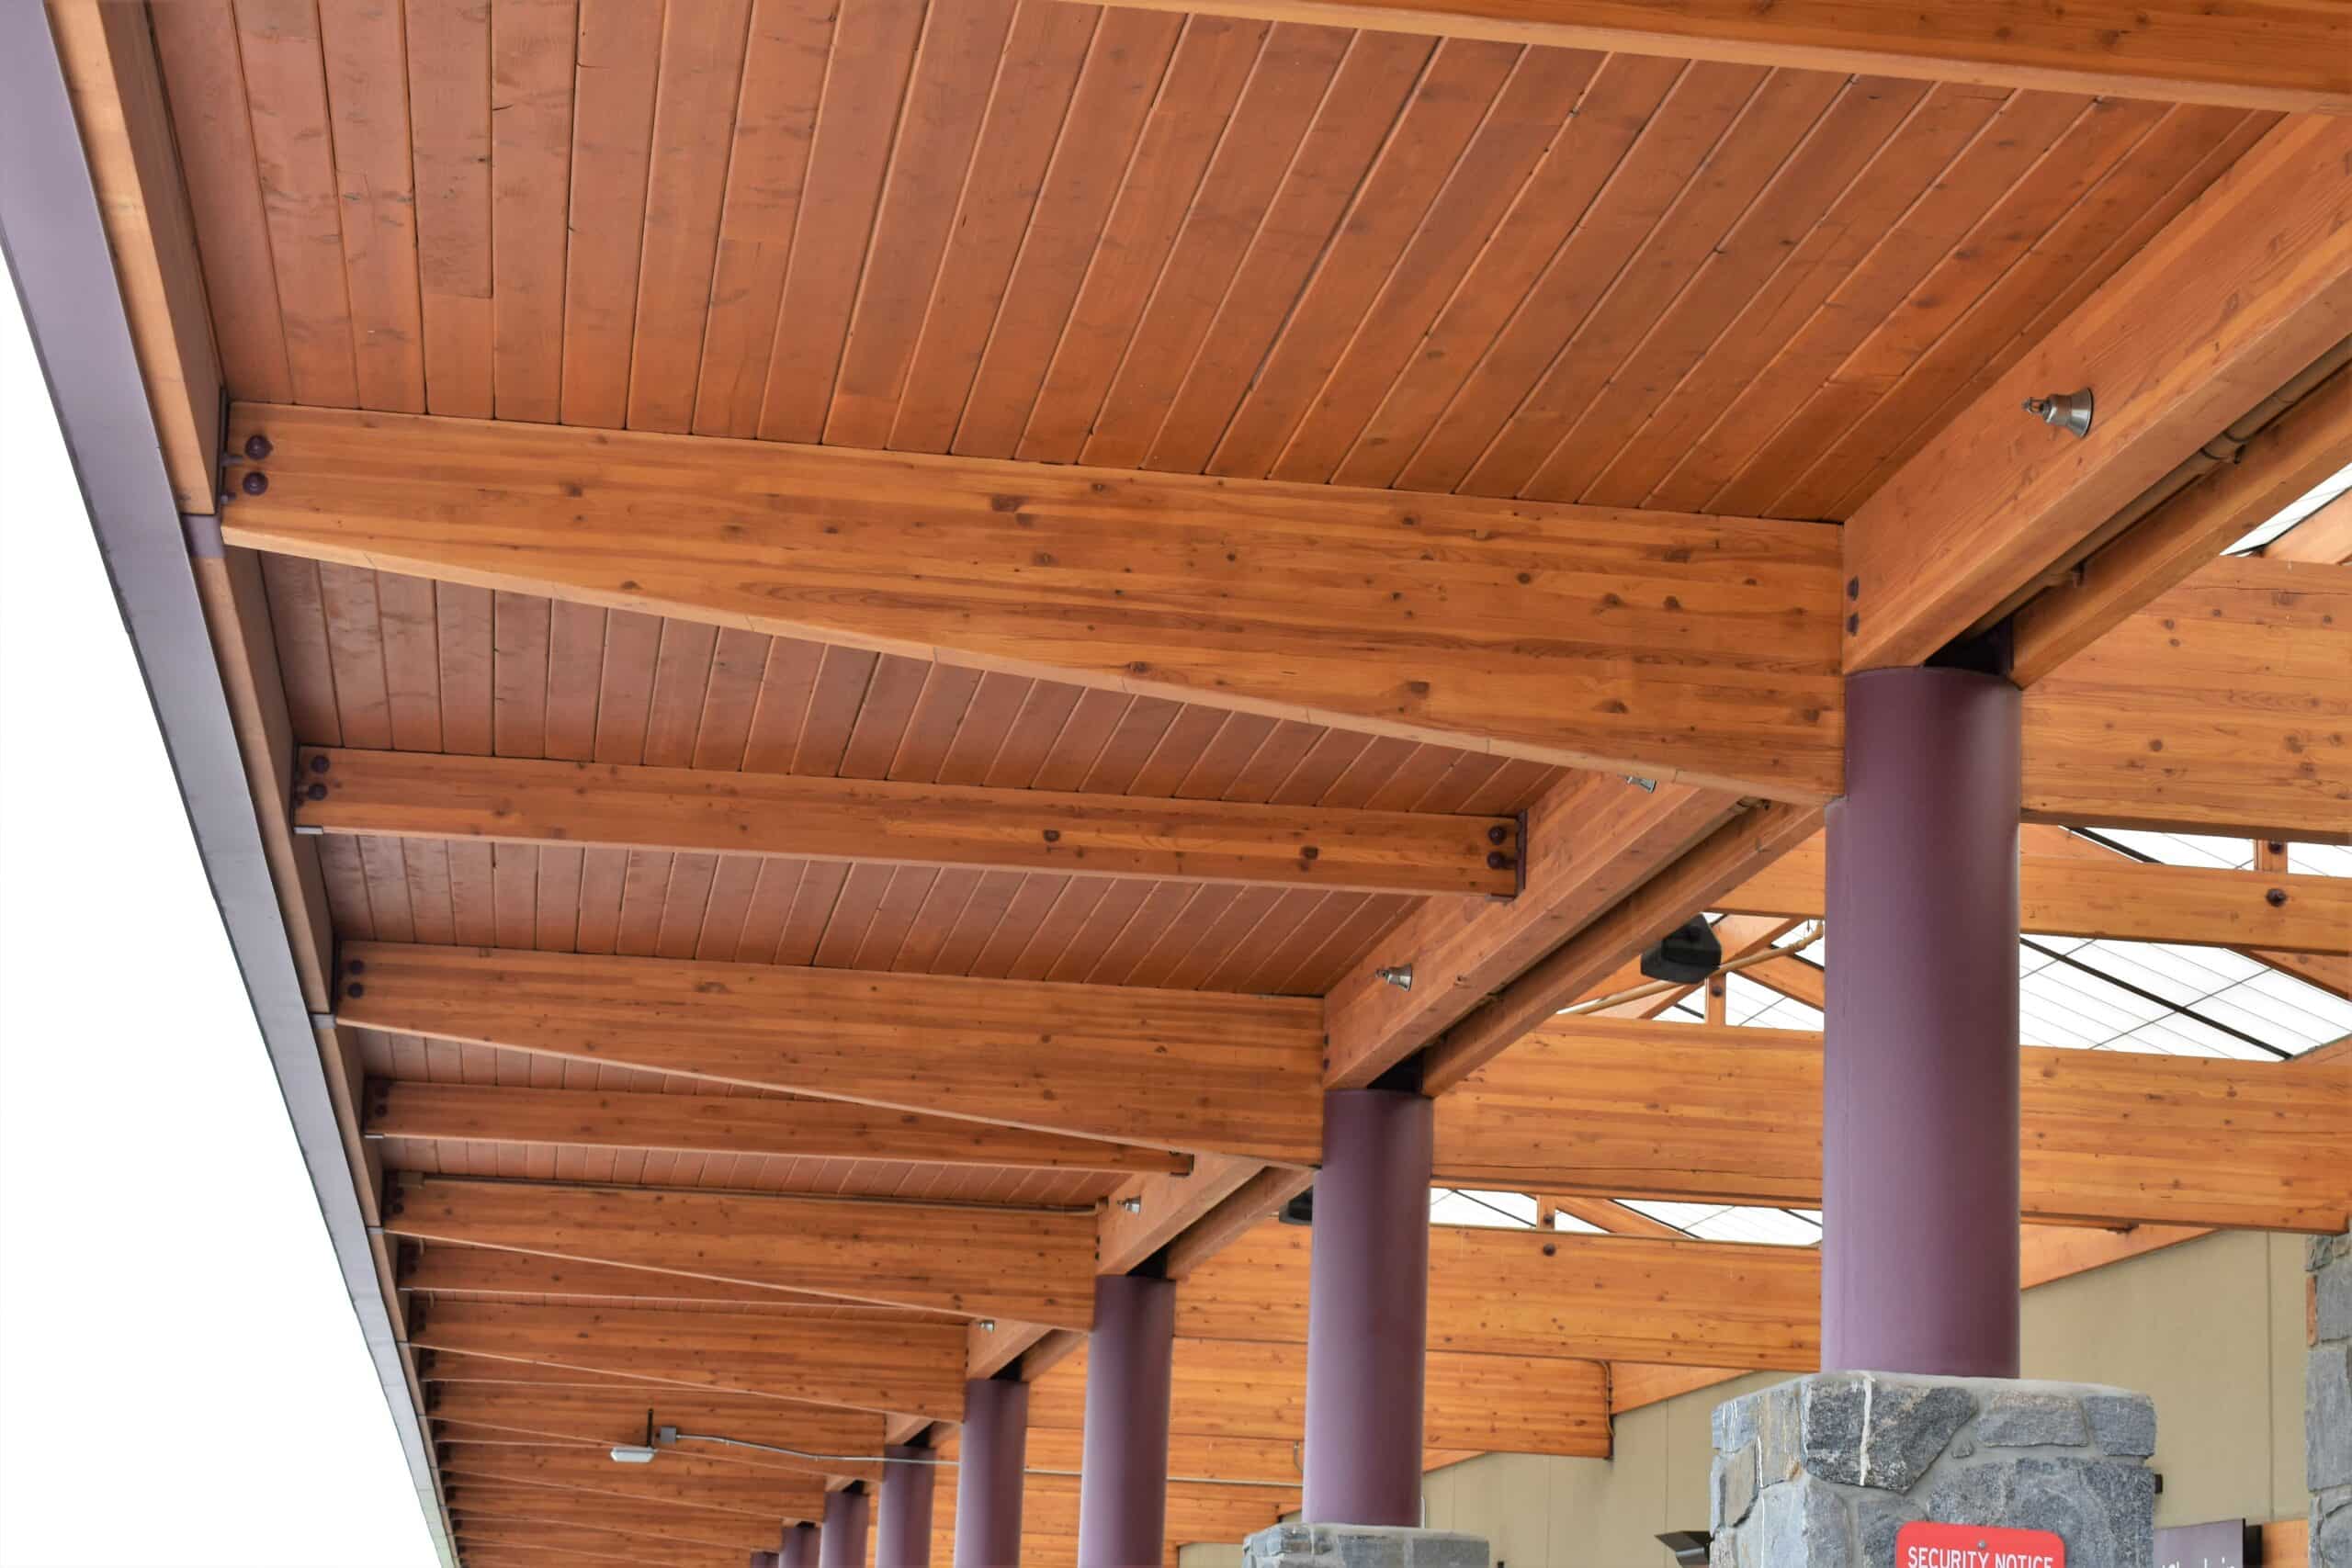 QB Corporation's Ridge and Rafter Glued laminated timber at Bozeman Yellowstone International Airport